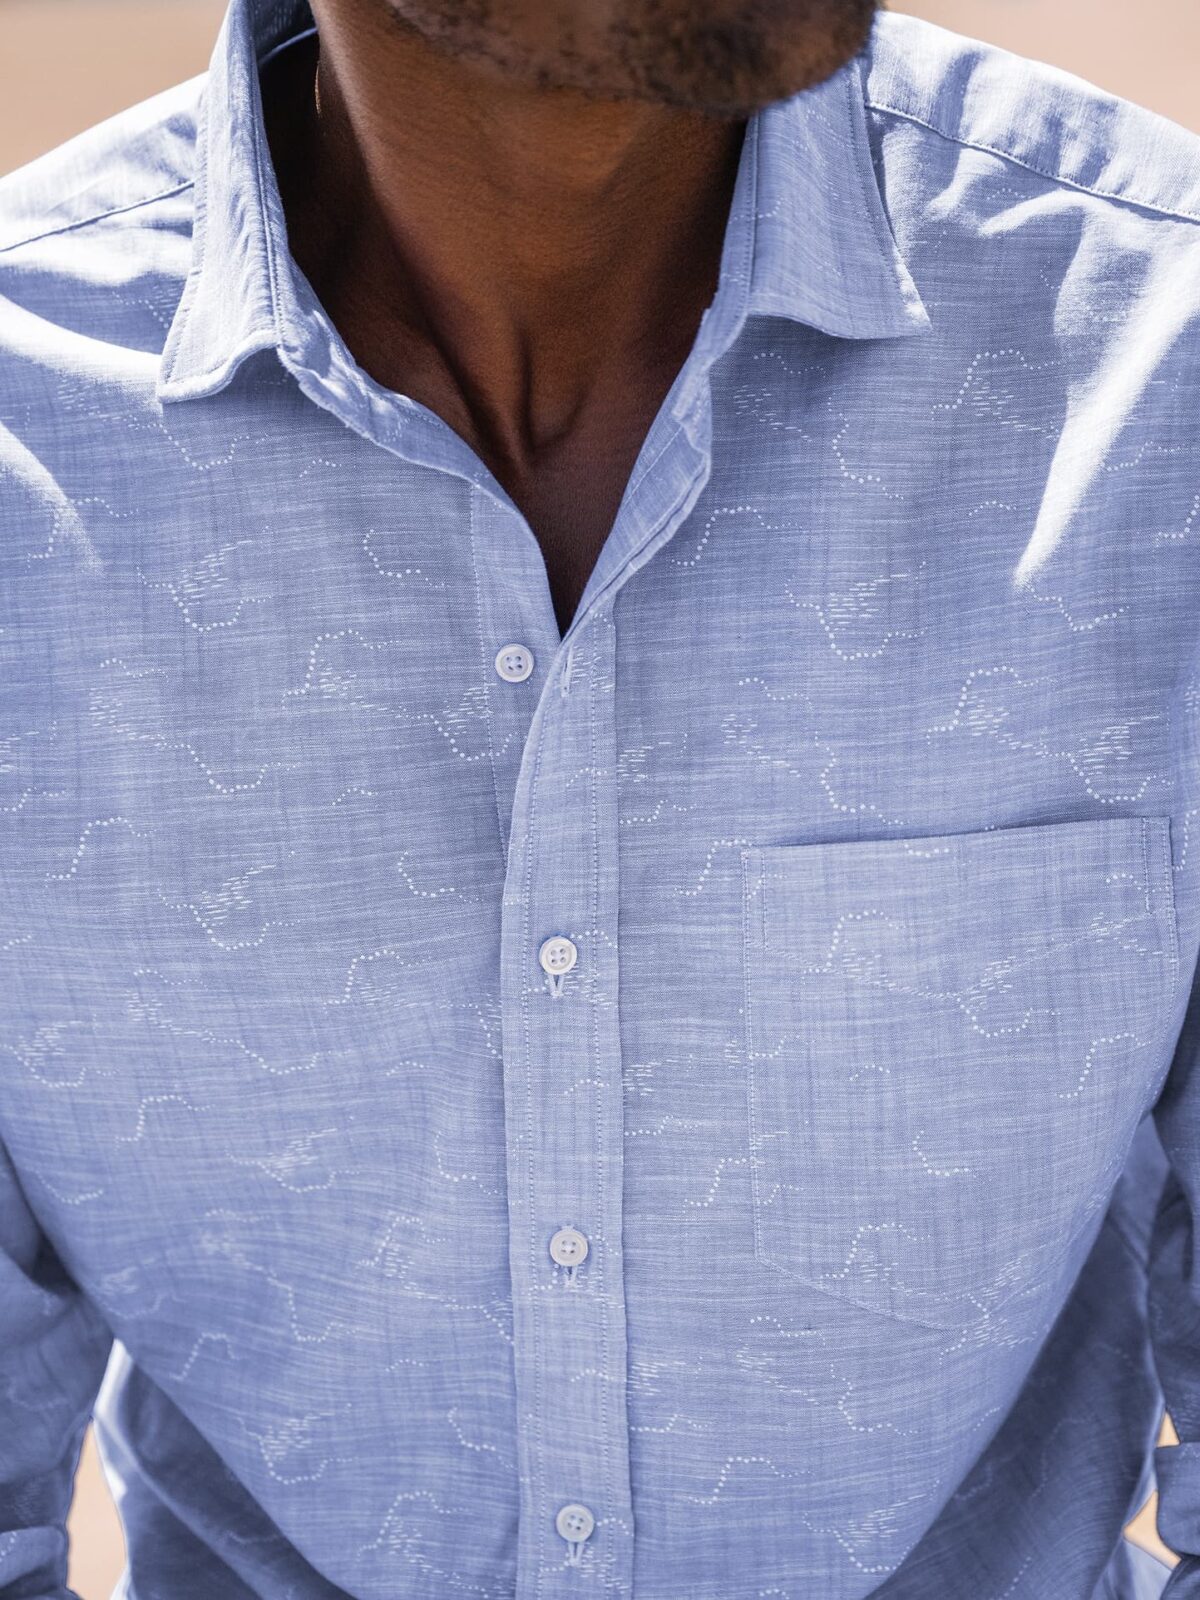 Monogram Motif Cotton Slim Fit Shirt in Pale Blue - Men